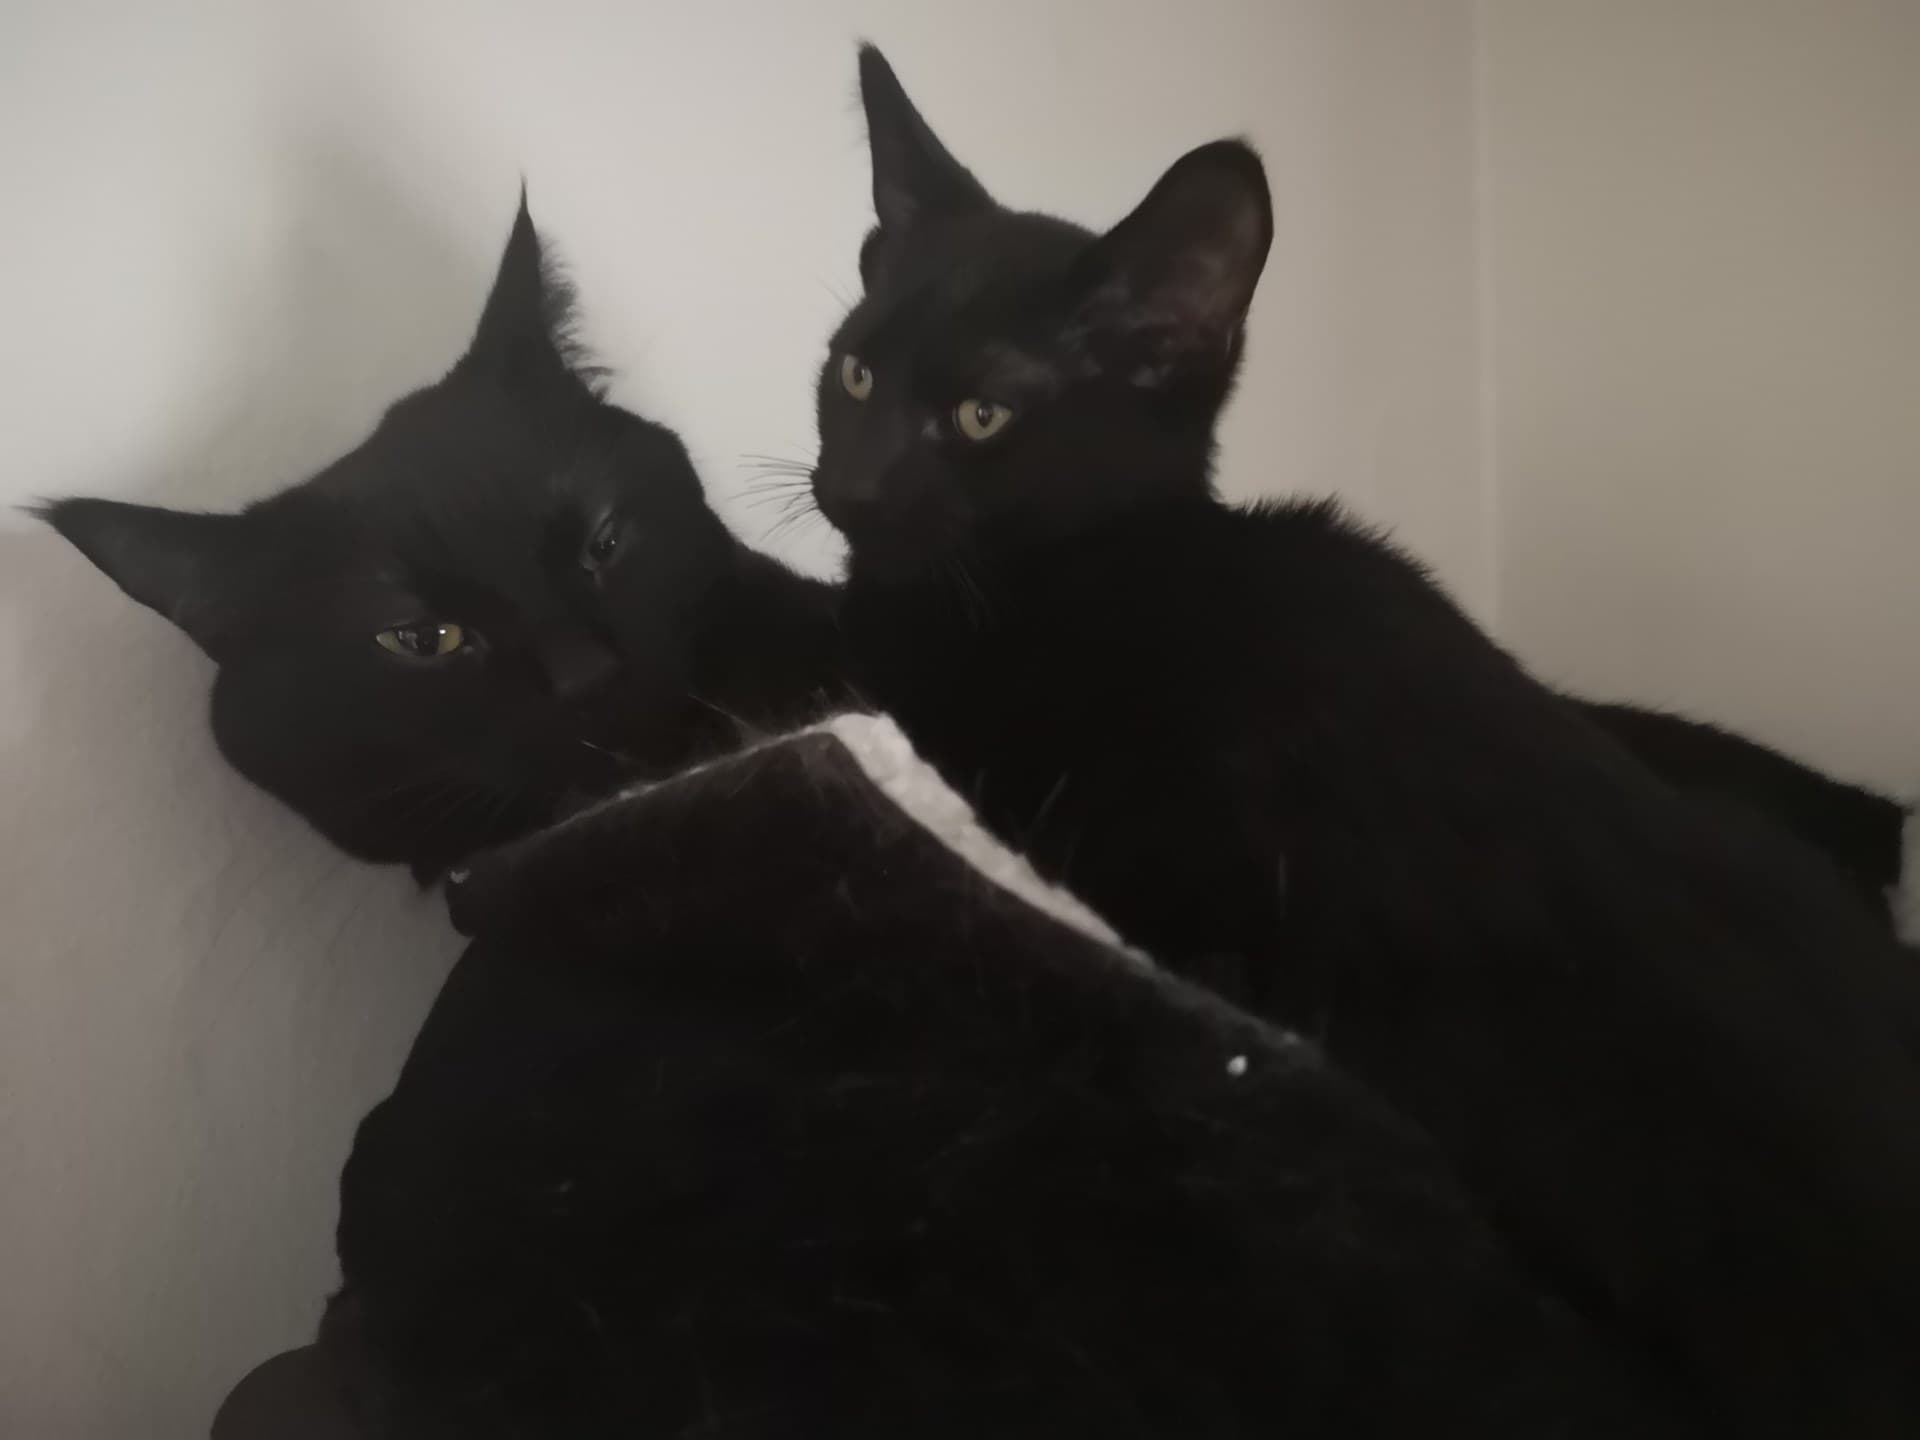 Two black kittens cuddling